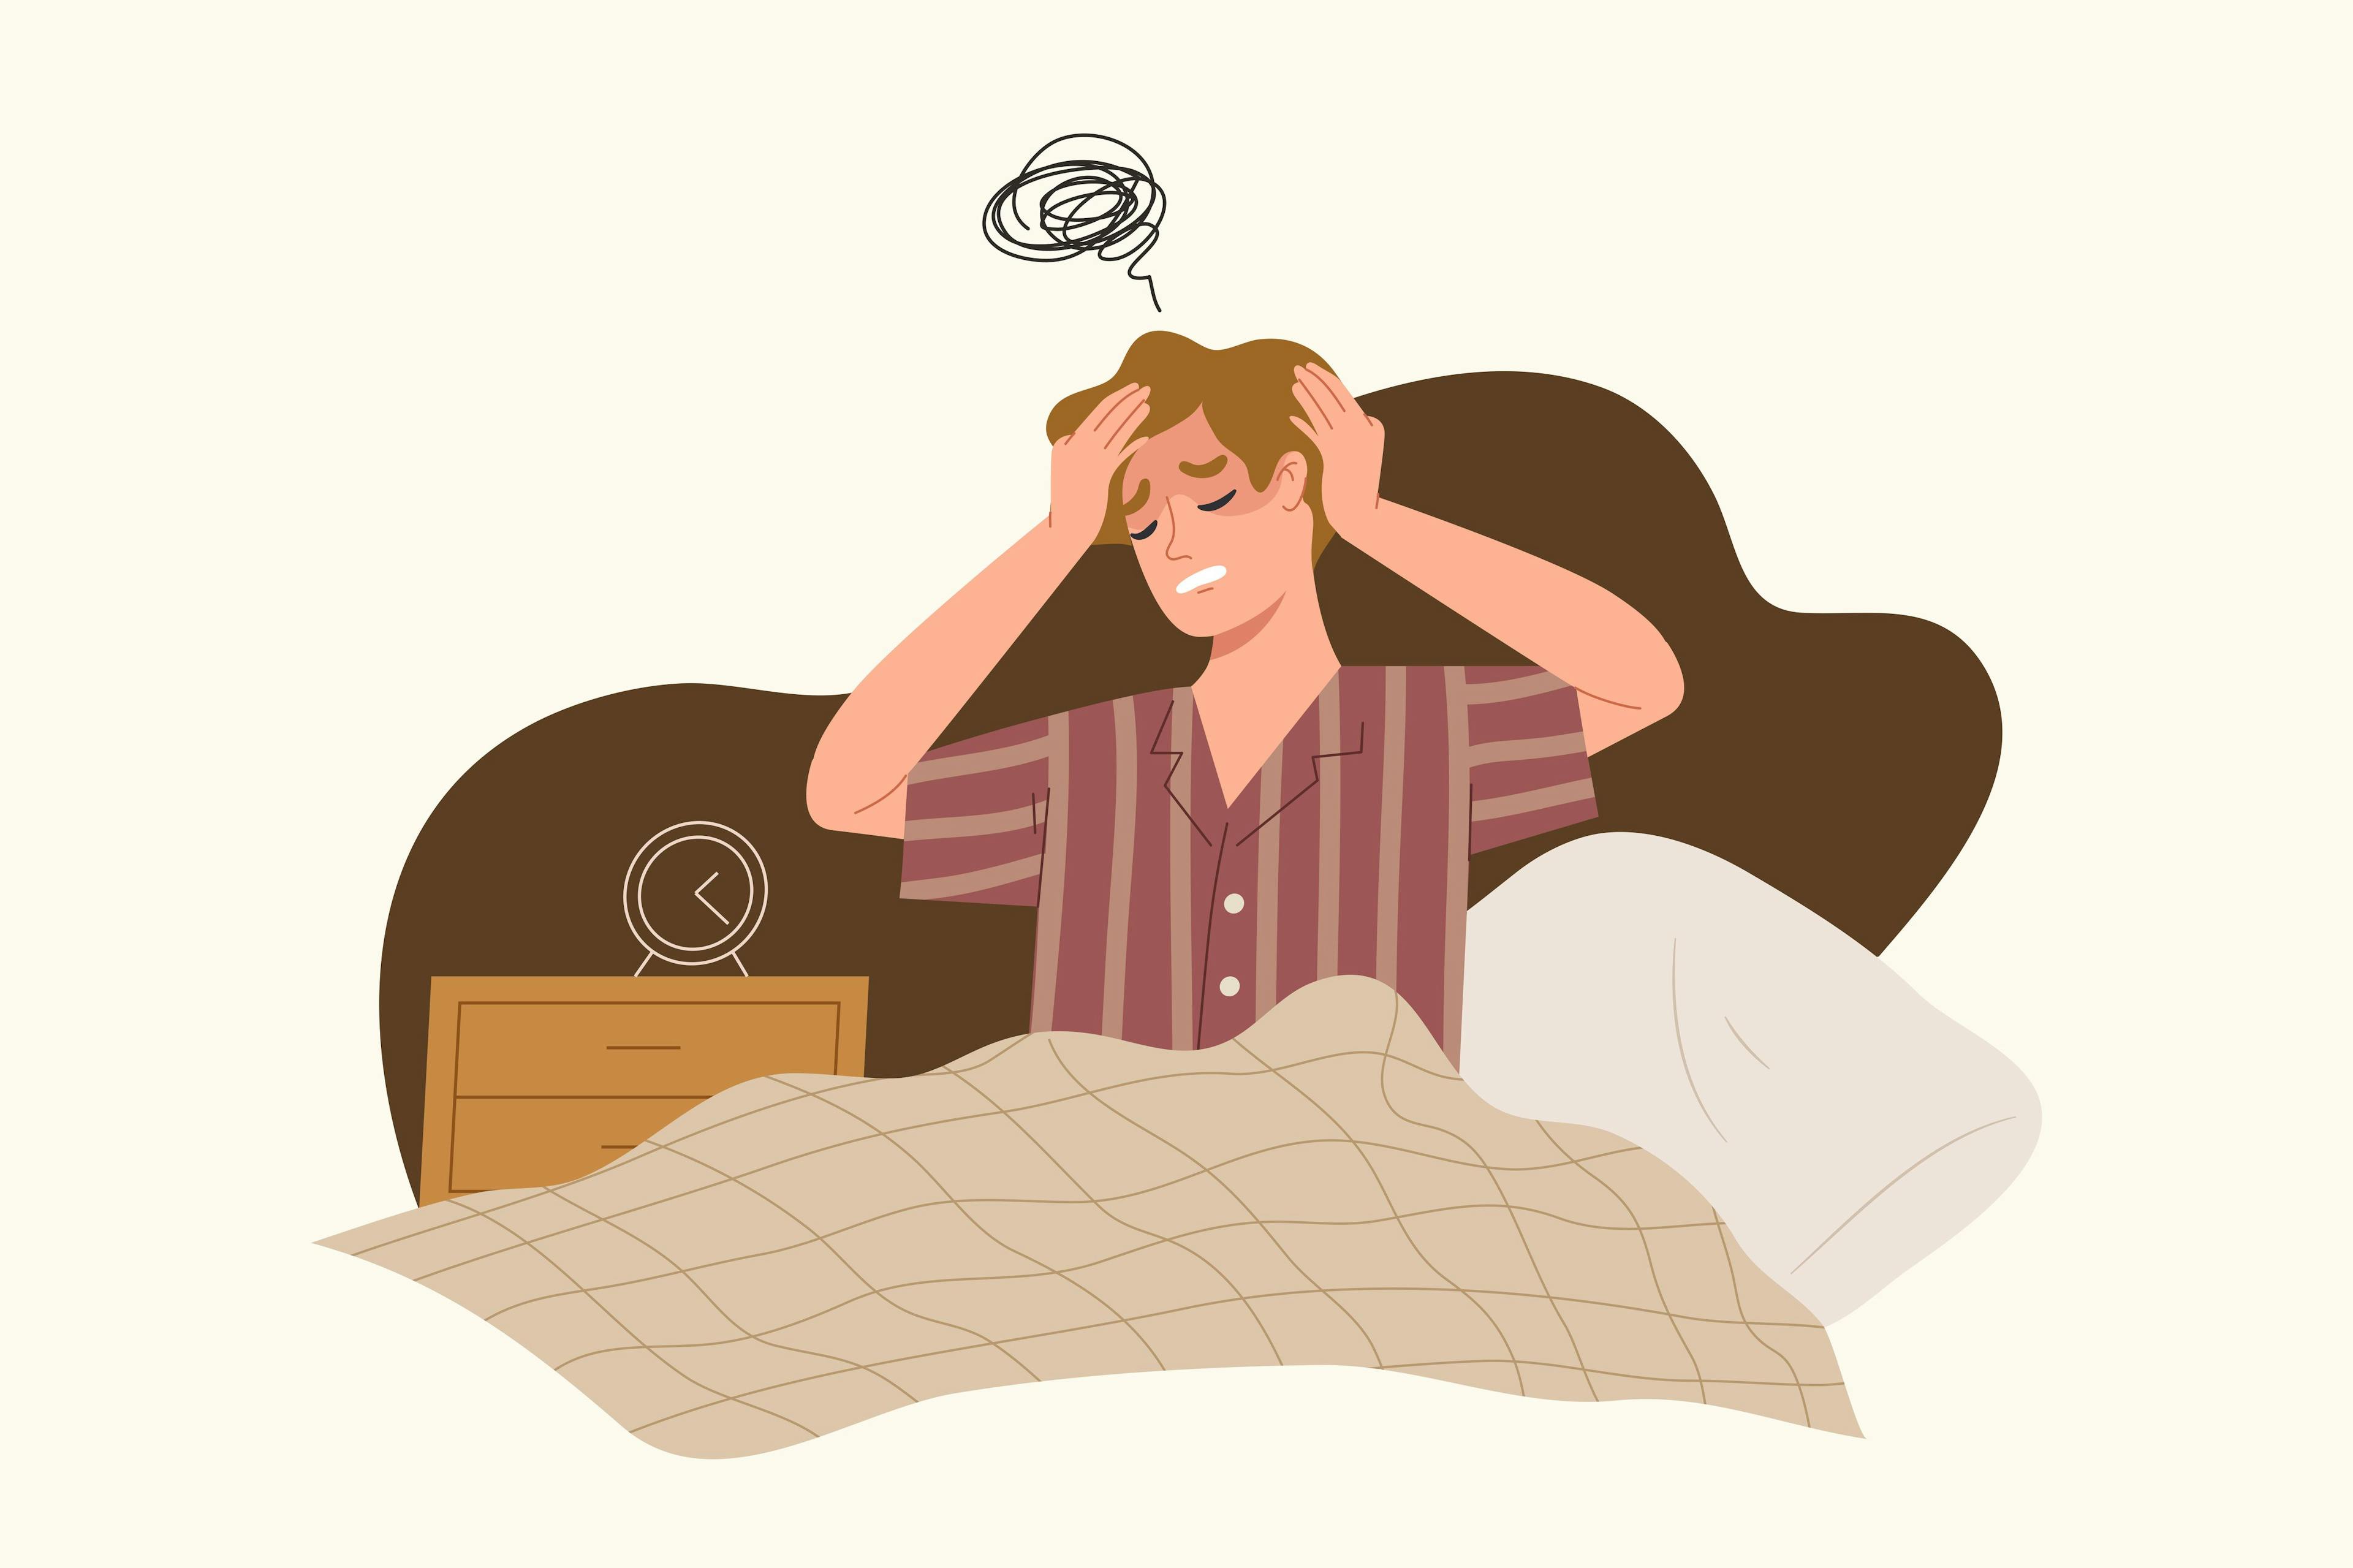 Adolescent Struggling to Sleep, Insomnia Model | image credit: Madua - stock.adobe.com